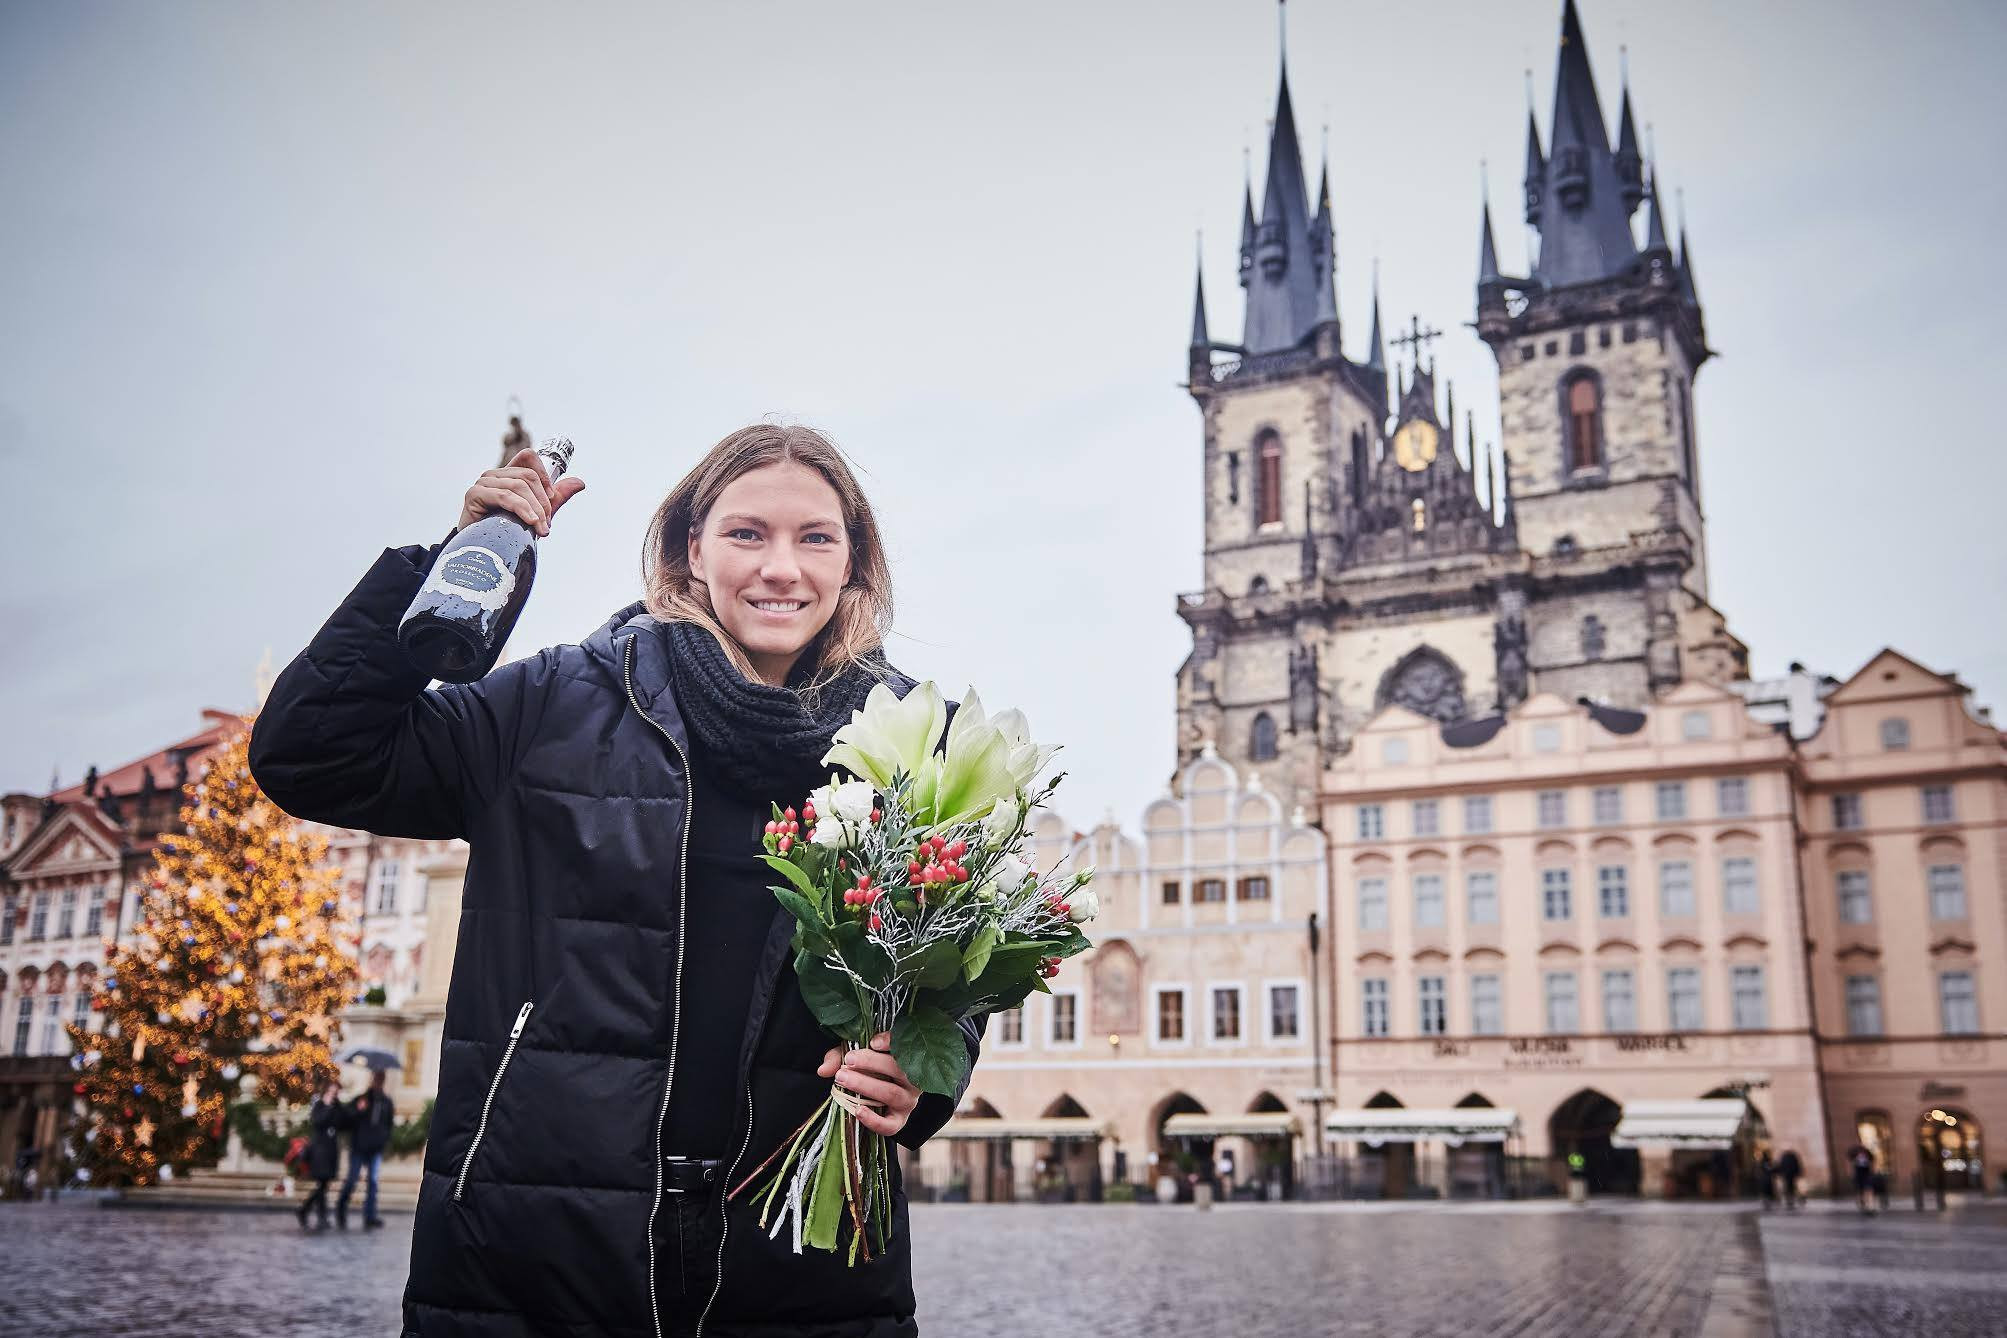 Eliška Krupnová has been named the 2020 female floorball player of the year ©FlorbalCZ